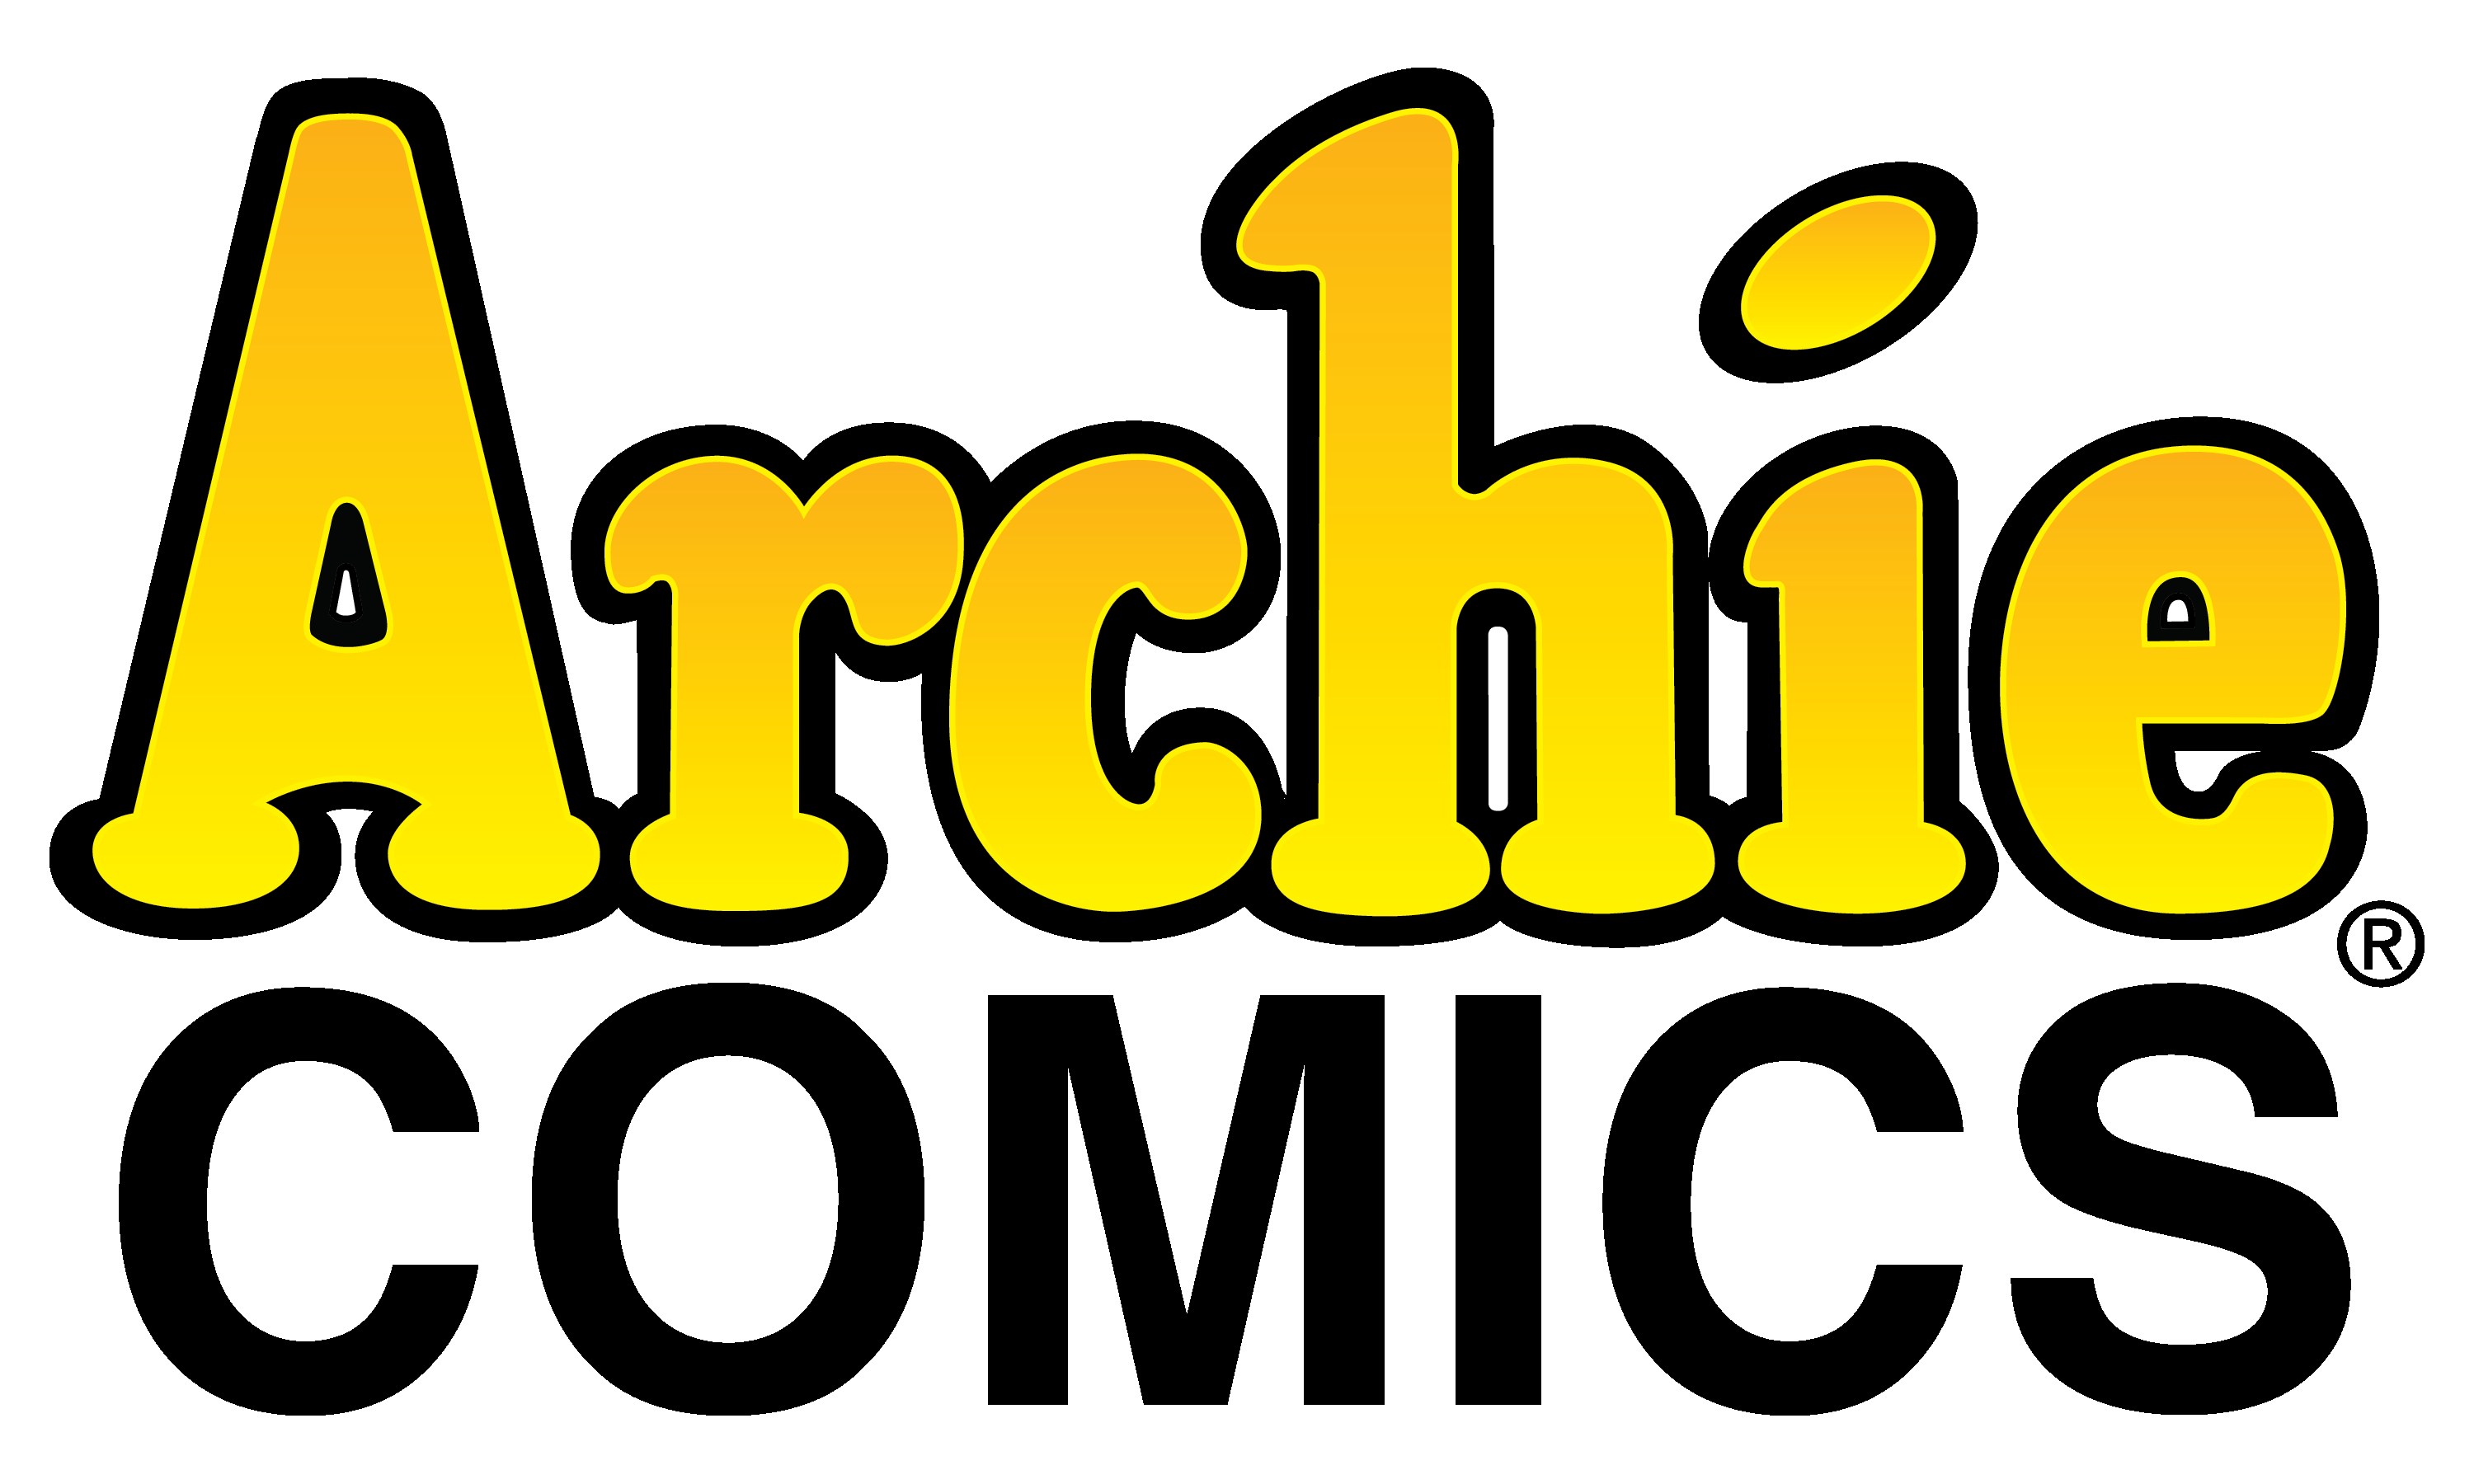 archie comics logo hd free download #40780